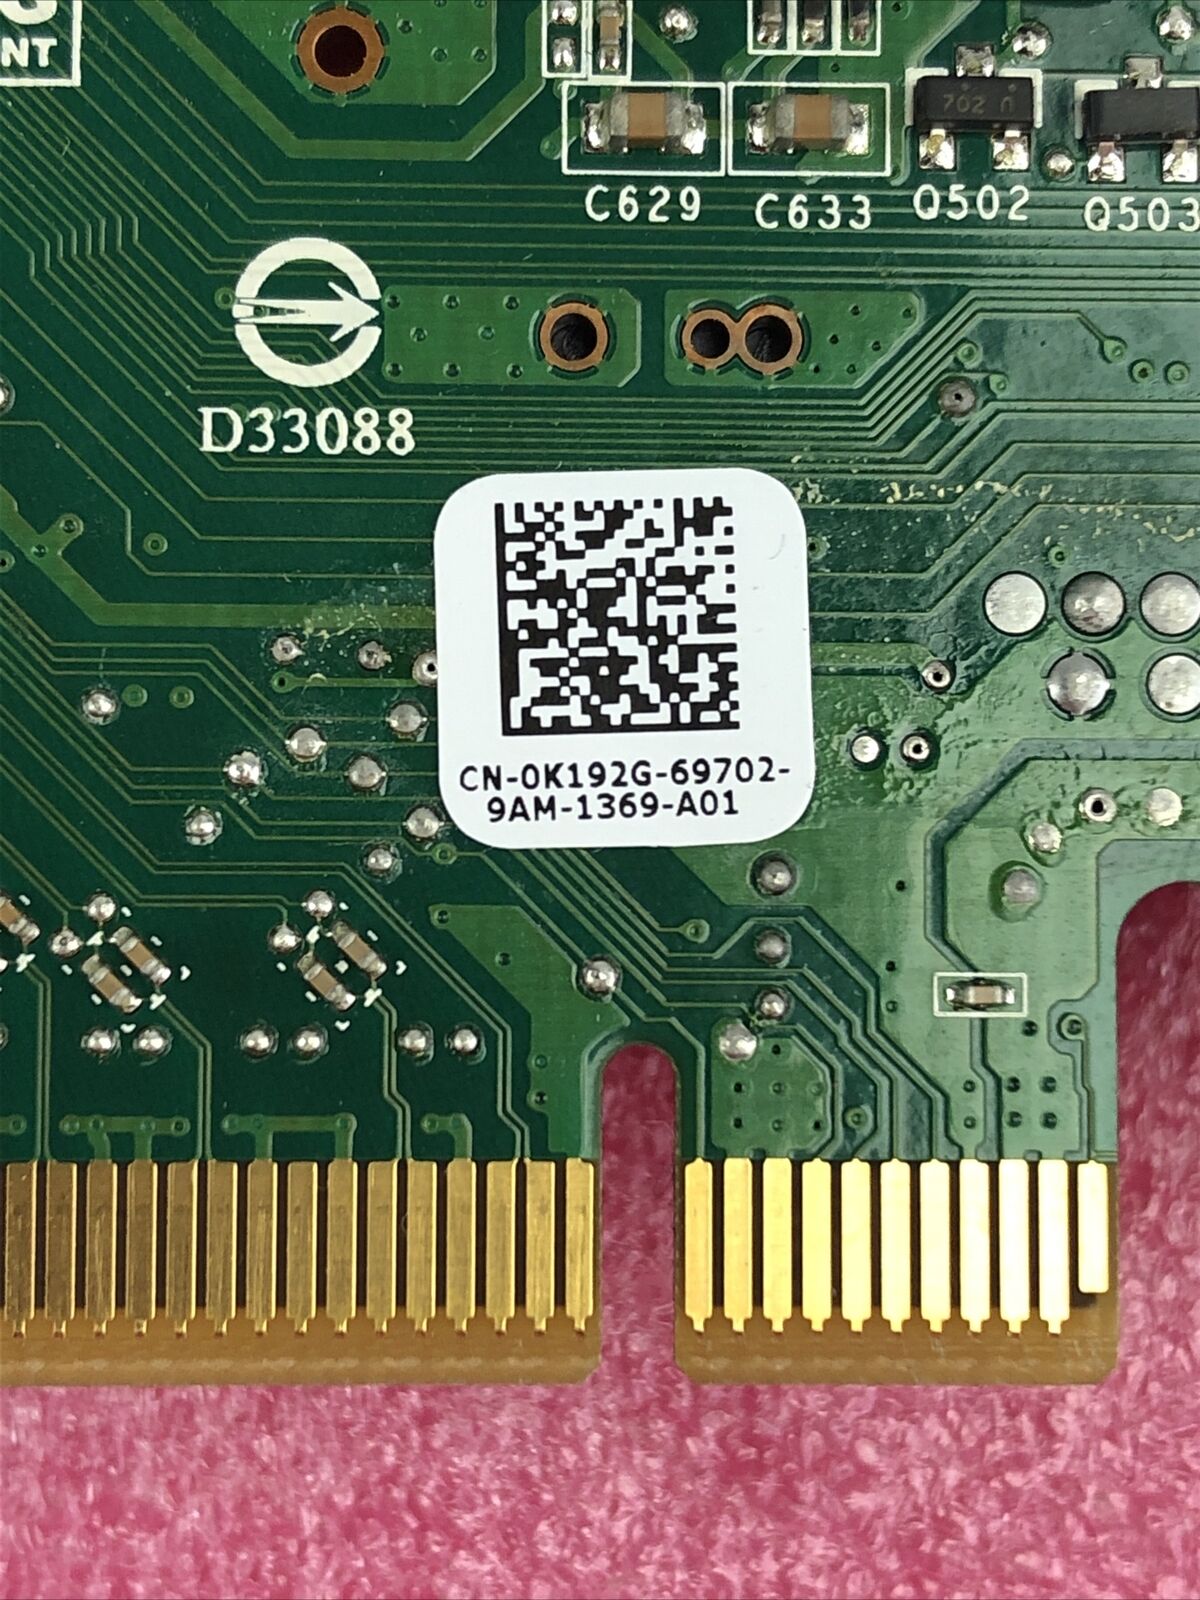 Nvidia GeForce 9300 256MB PCI-Express 2.0 Video Graphics